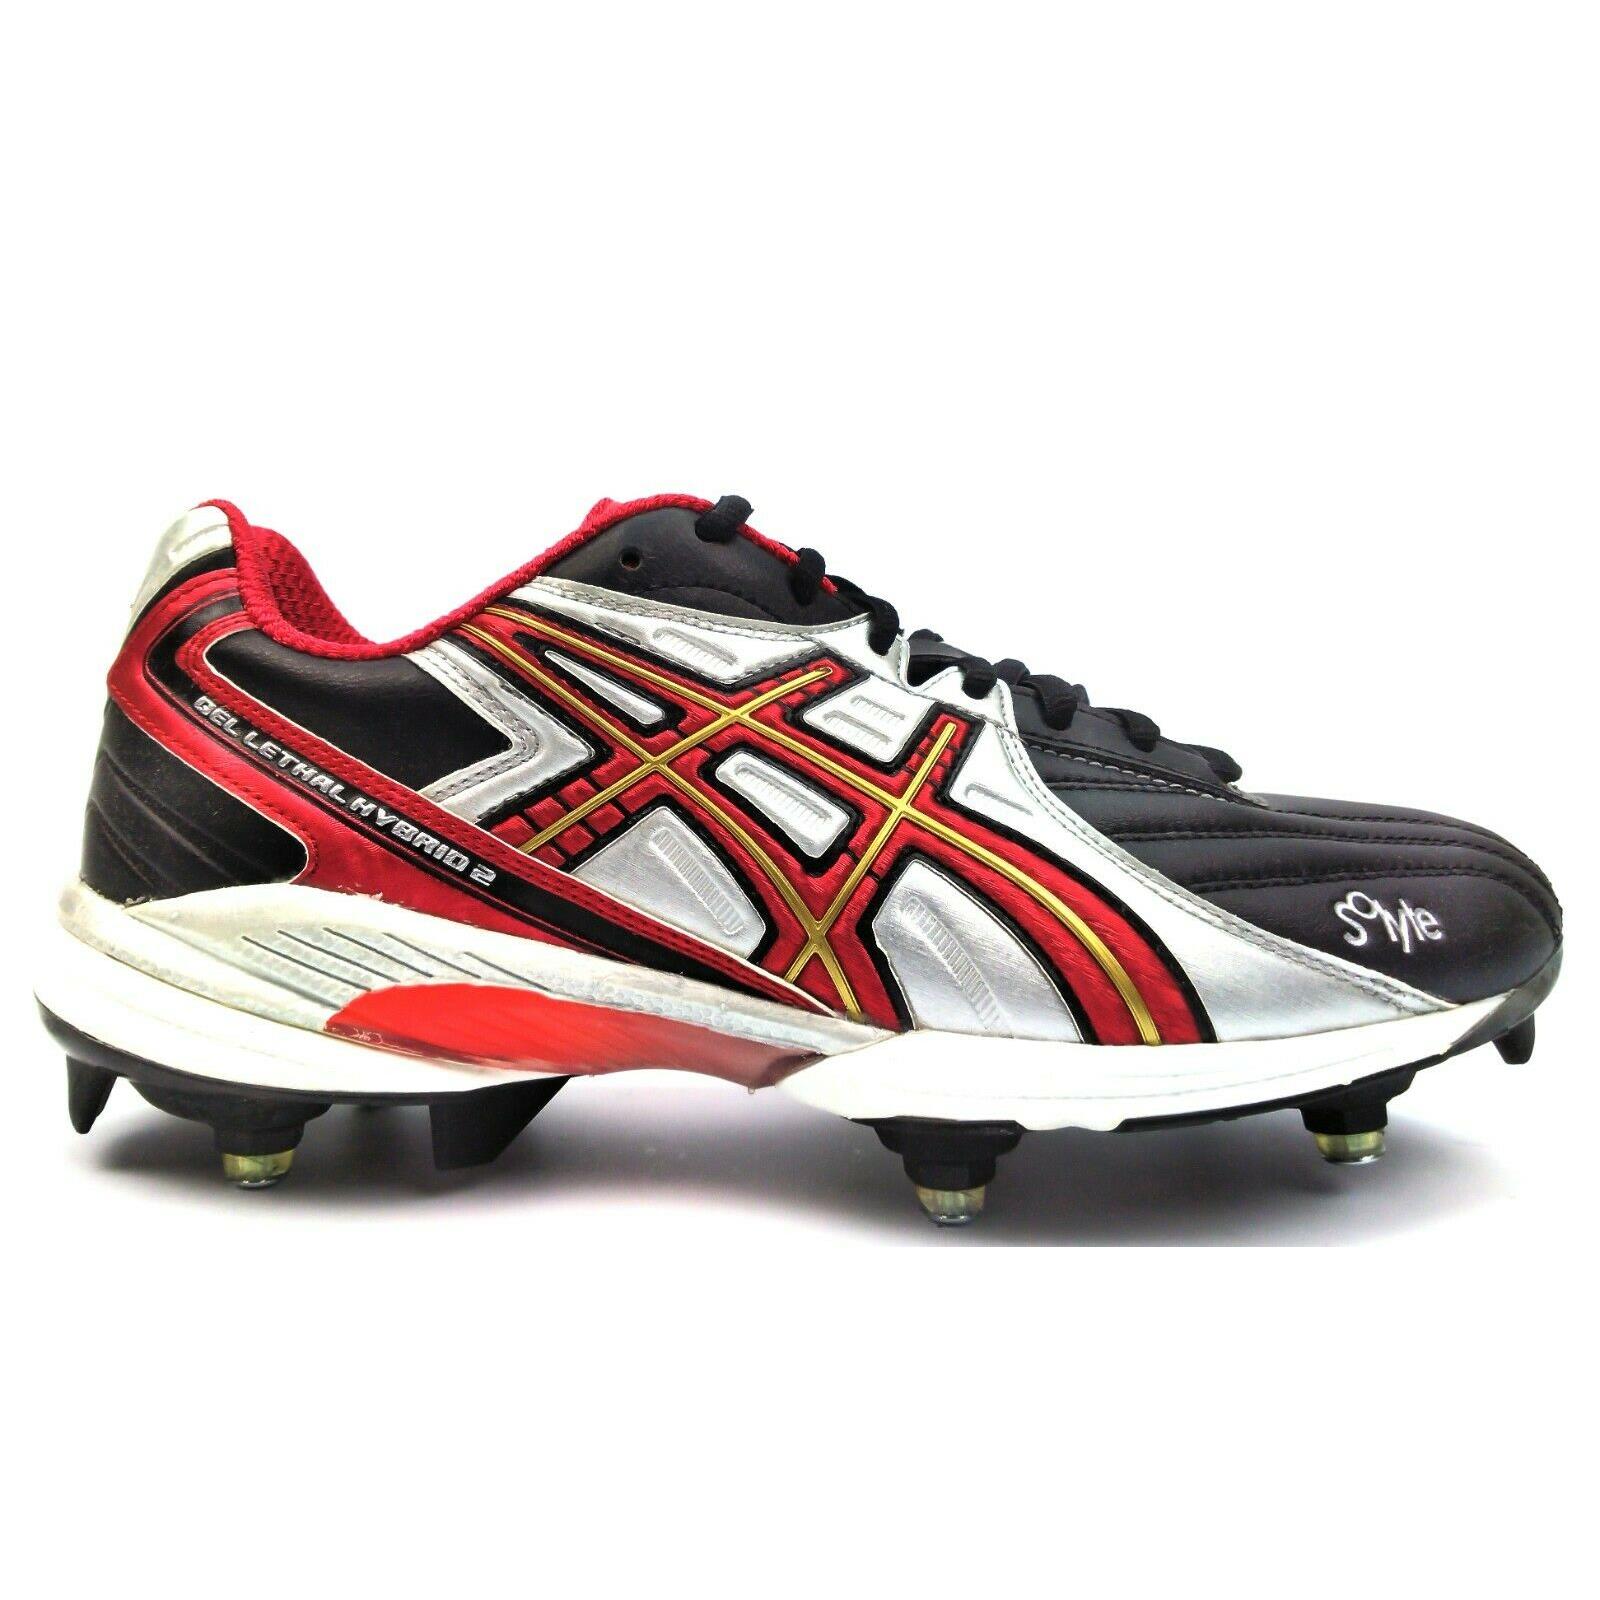 Asics Men`s Gel Lethal Hybrid 2 Lacrosse Cleats Field Shoes Black Red Ballarat